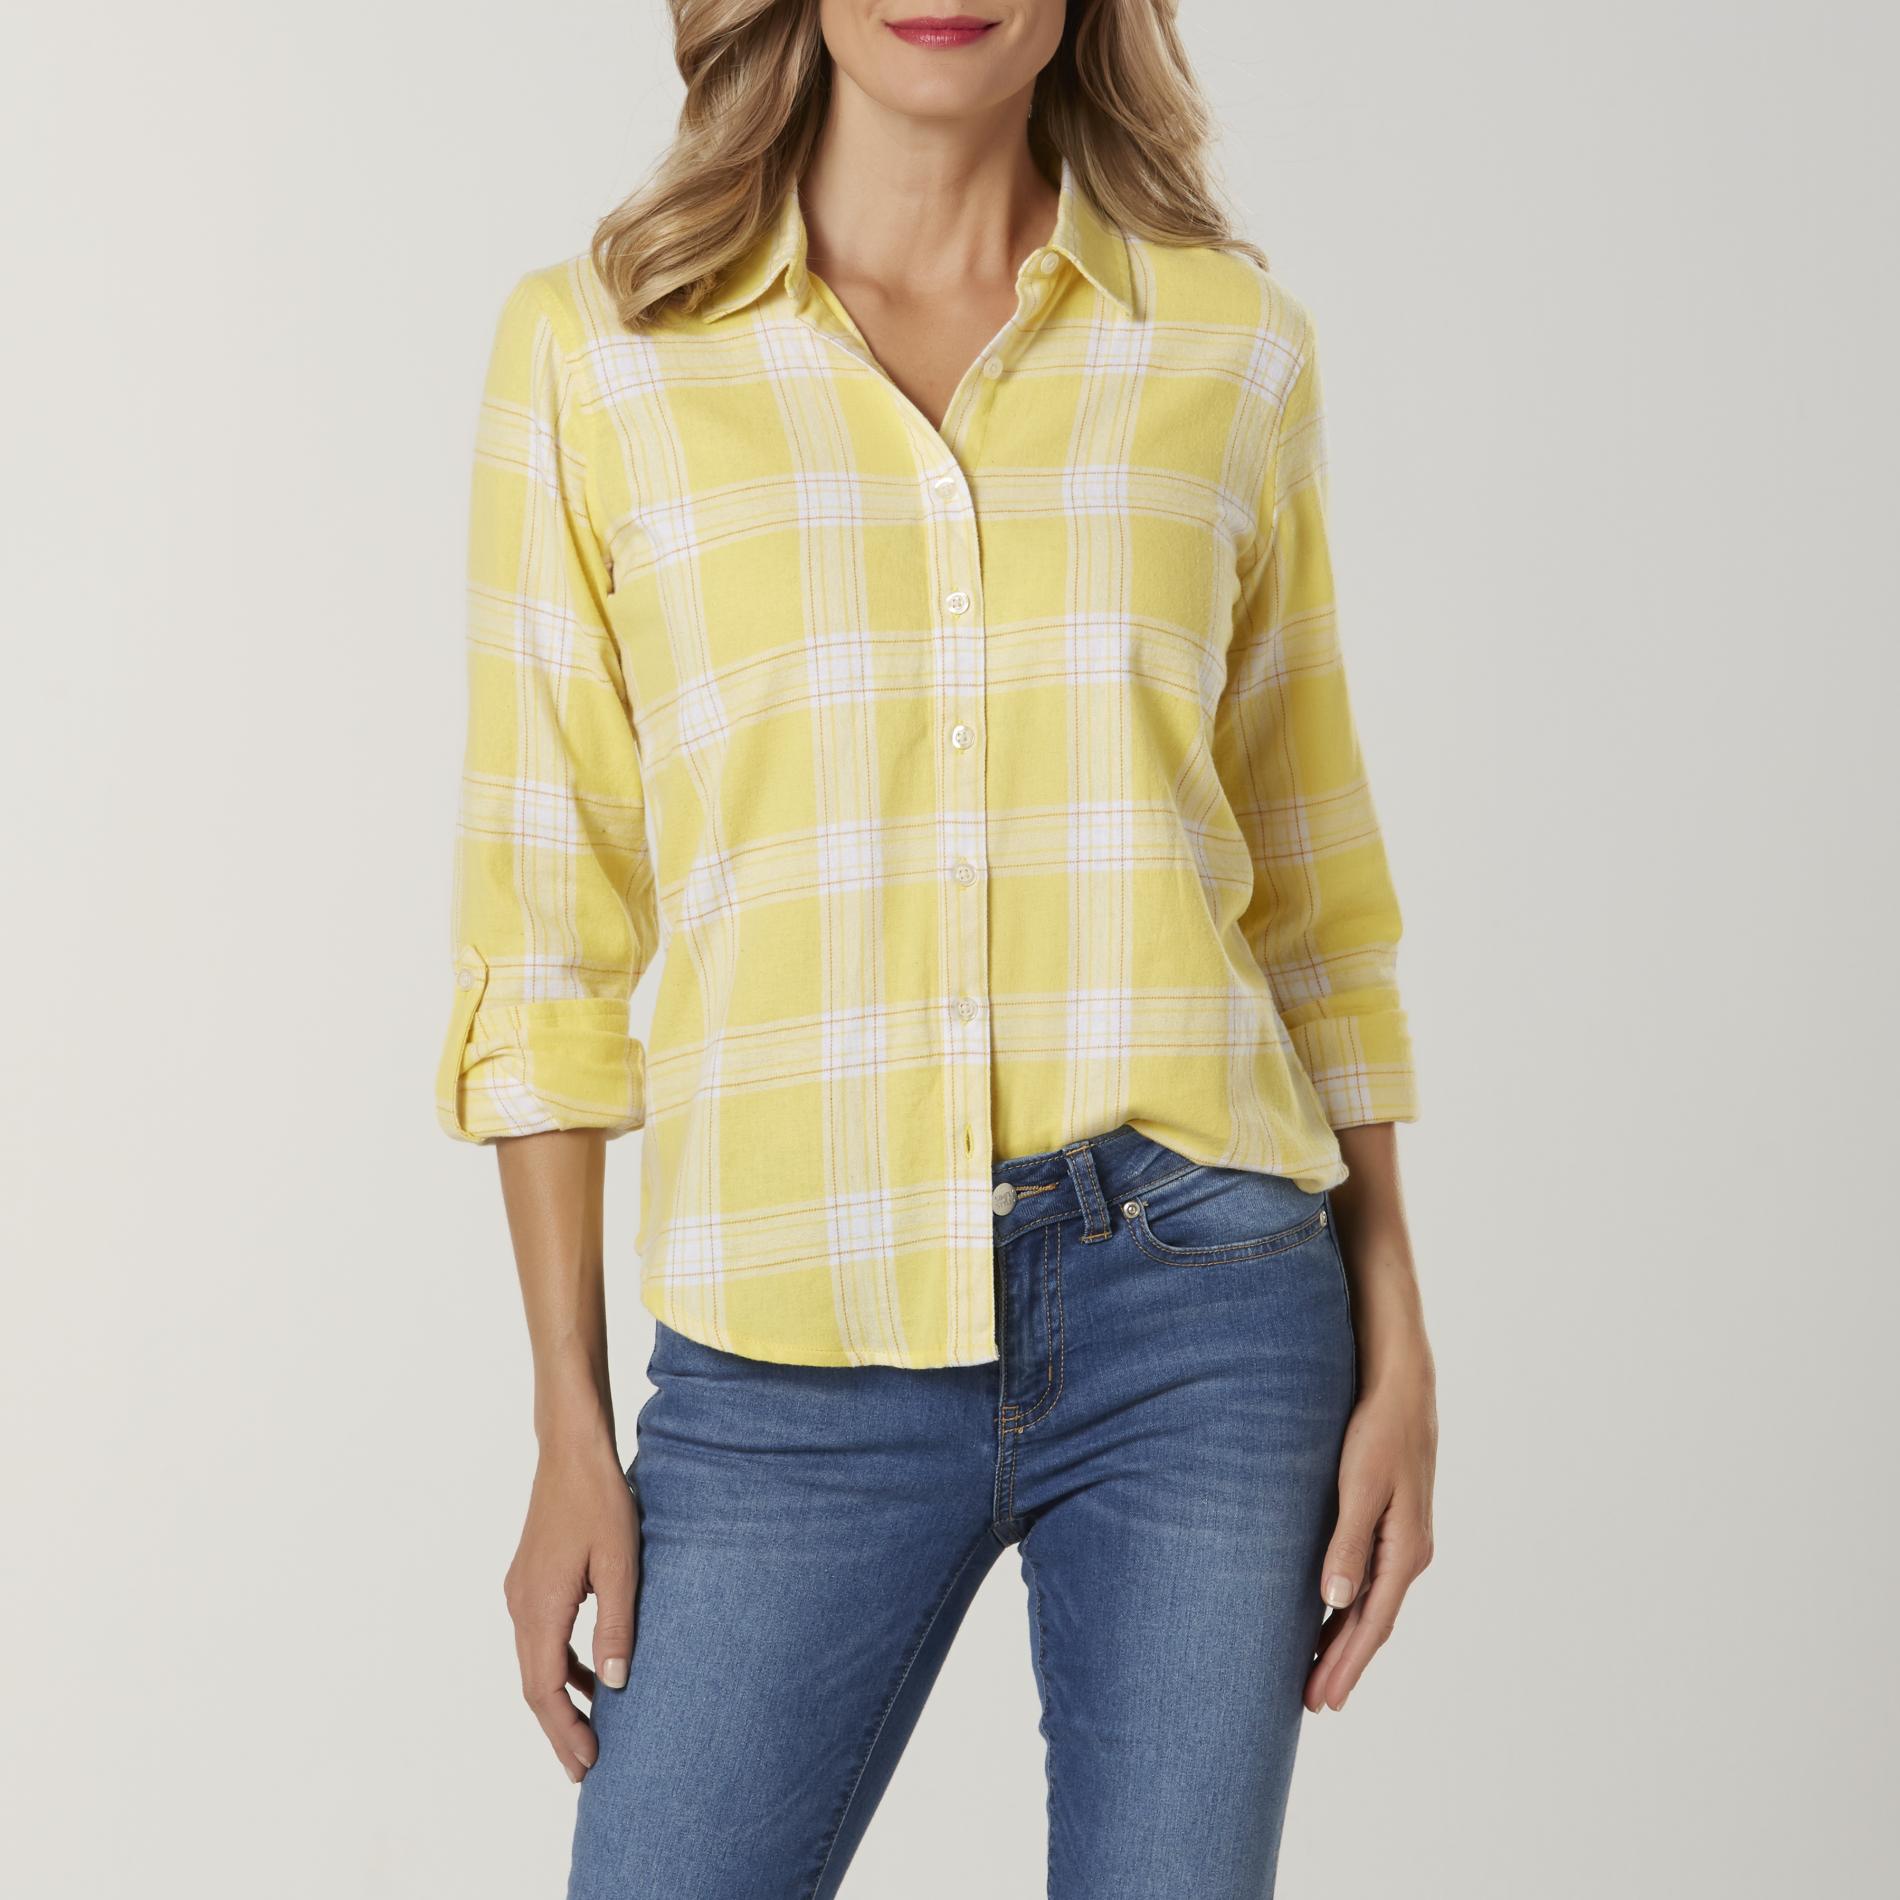 Basic Editions Women's Flannel Shirt - Plaid